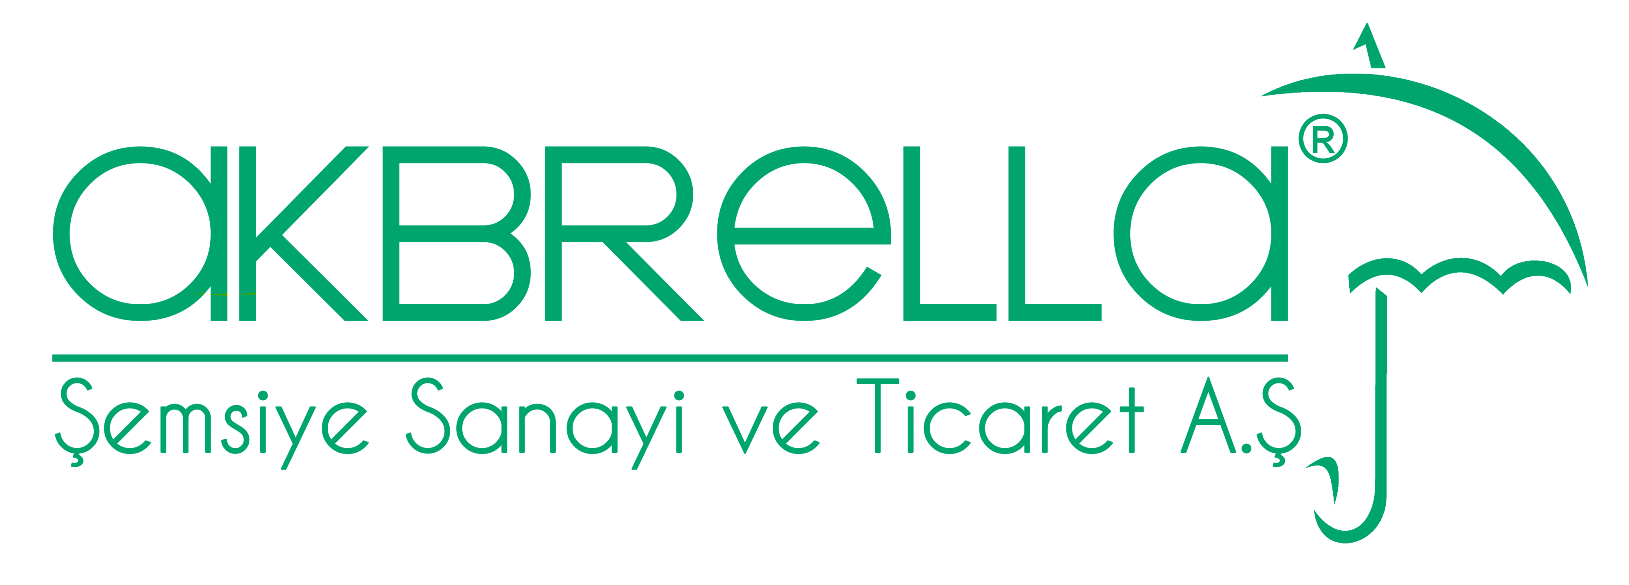 Akbrella logo